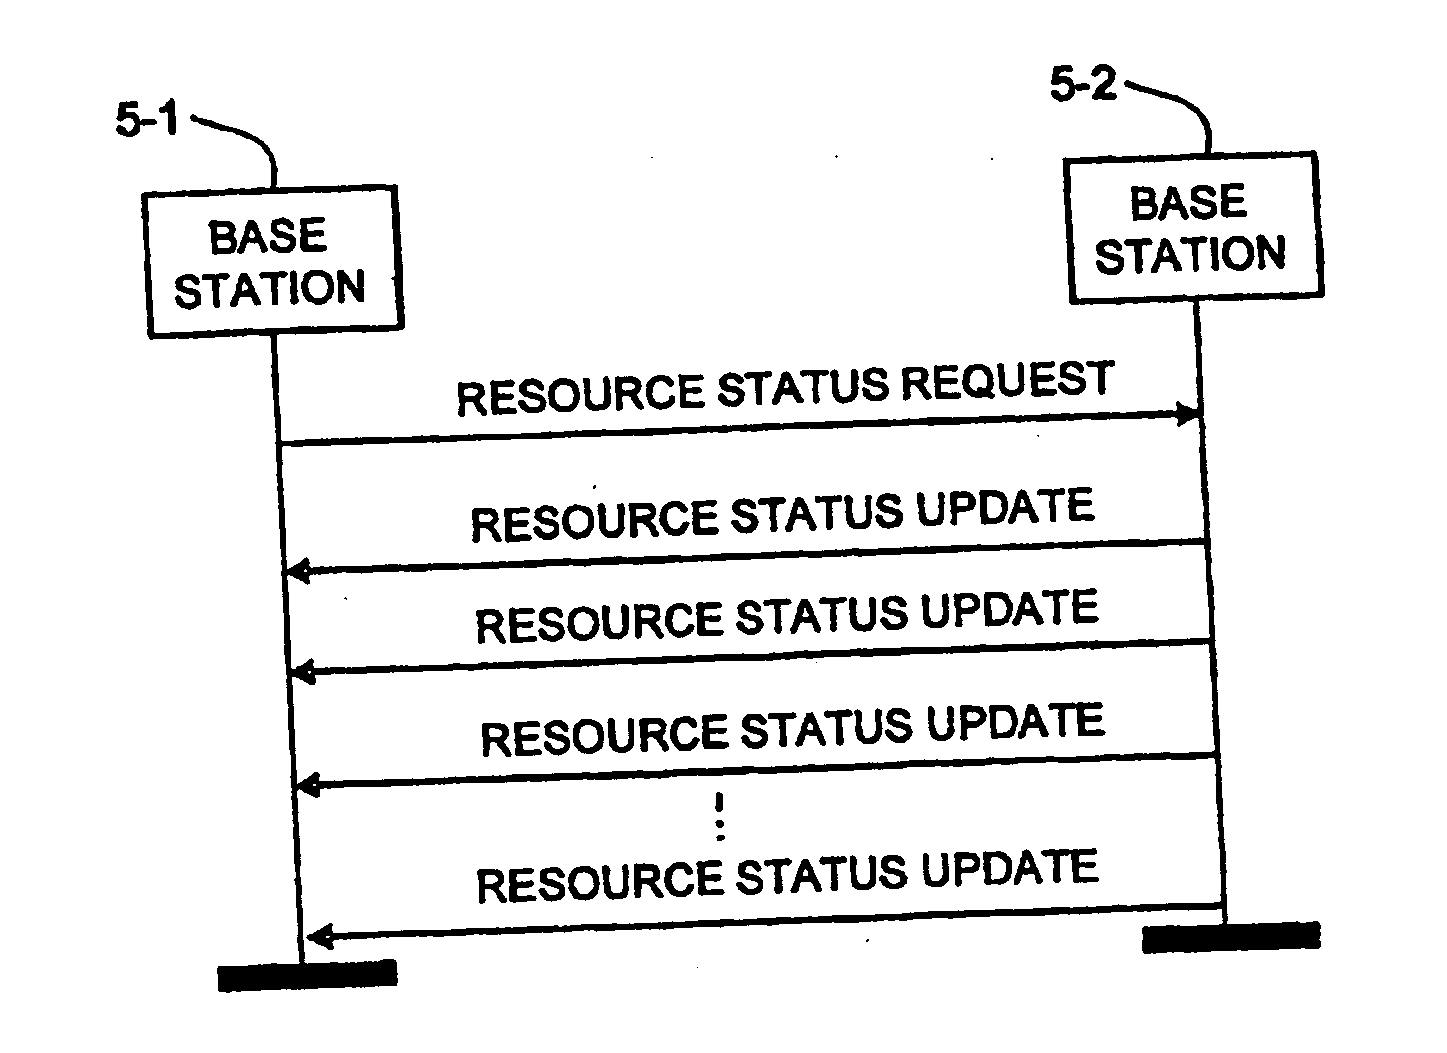 Signalling of resource status information between base stations for load balancing